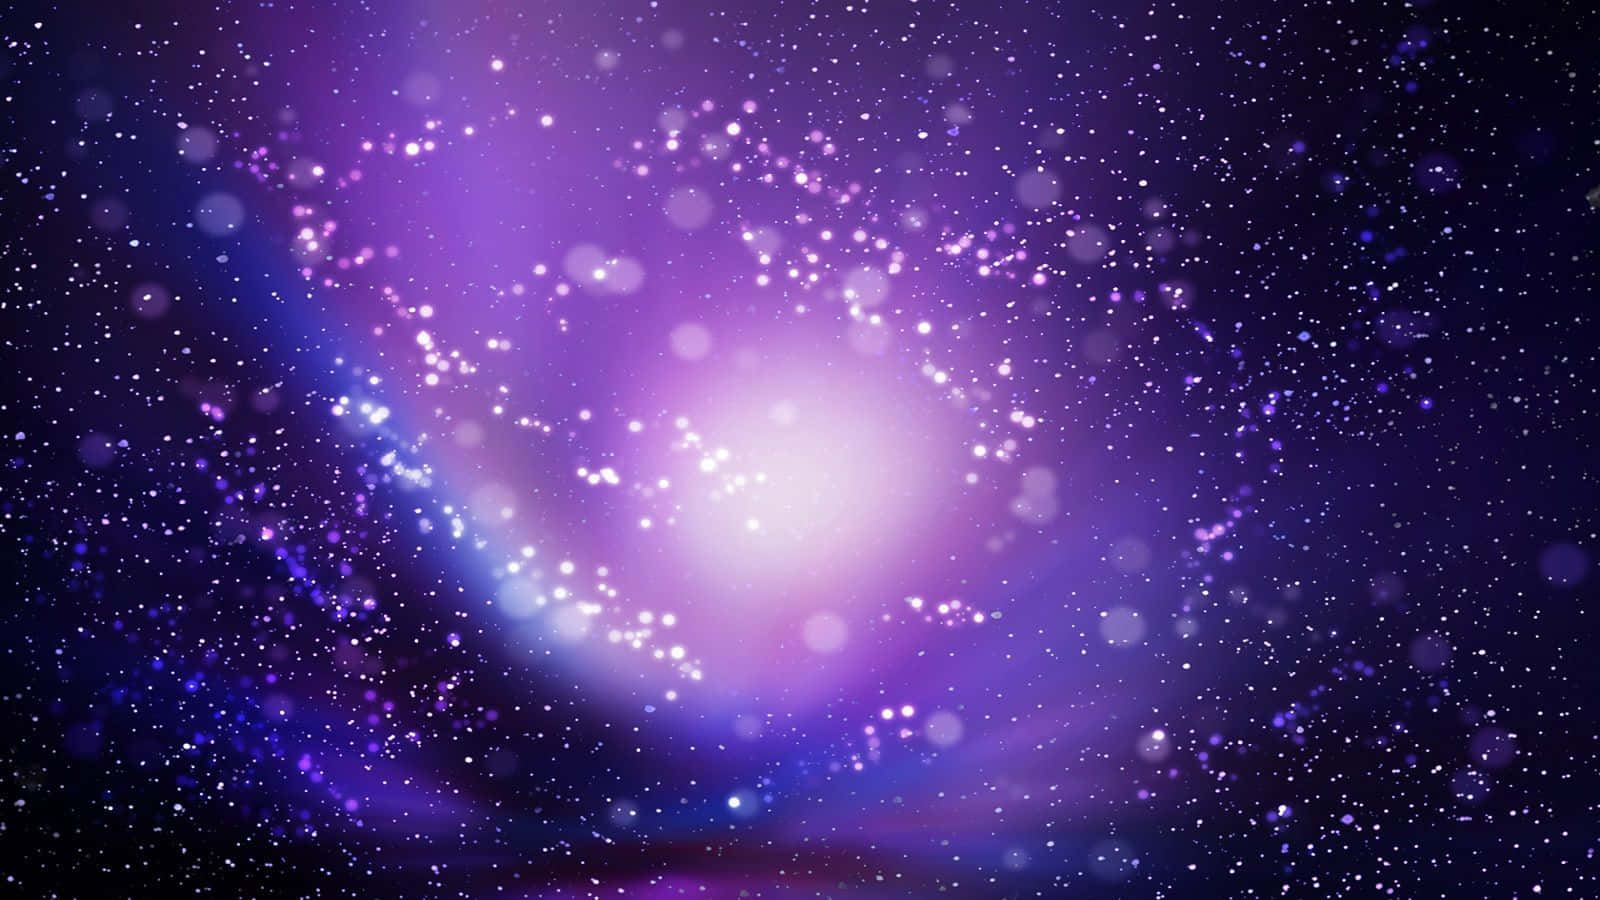 Nebulosamisteriosa De Estrella Púrpura En El Espacio Profundo